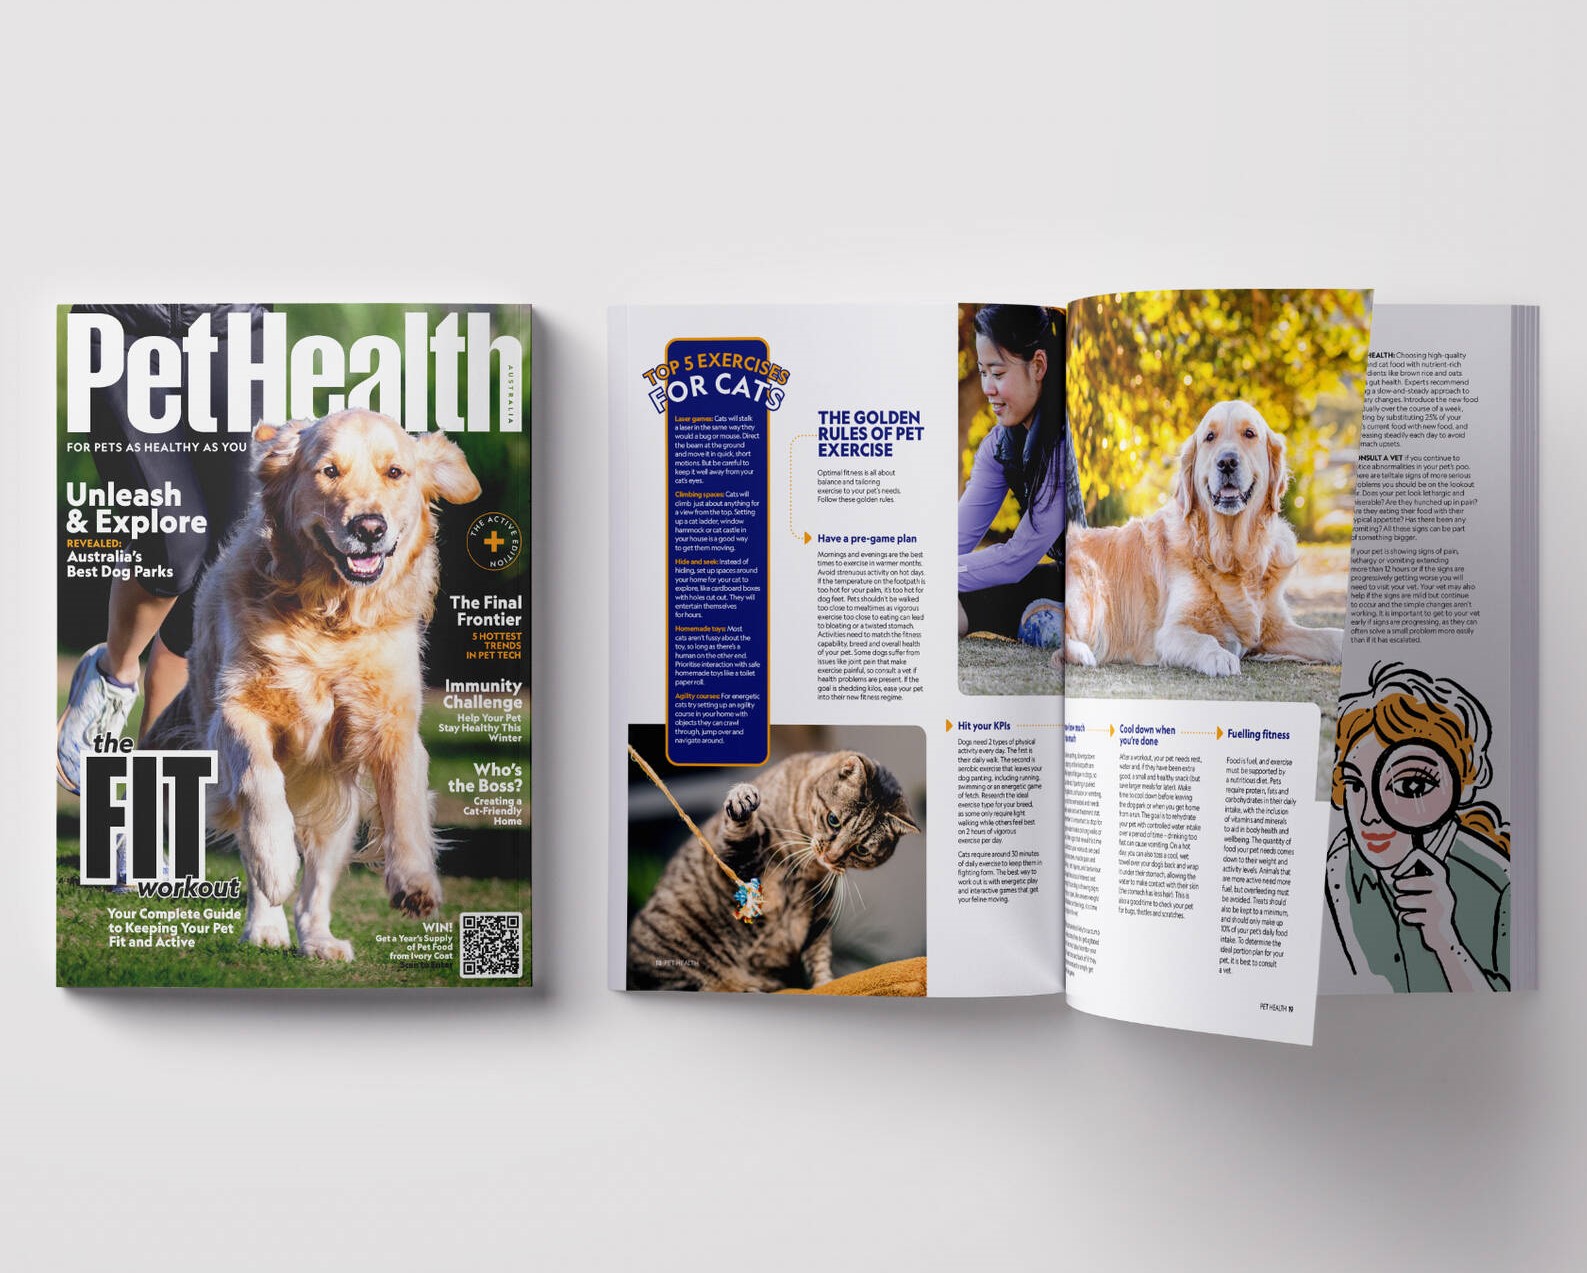 Pet Health Australia magazine – can you trust it?